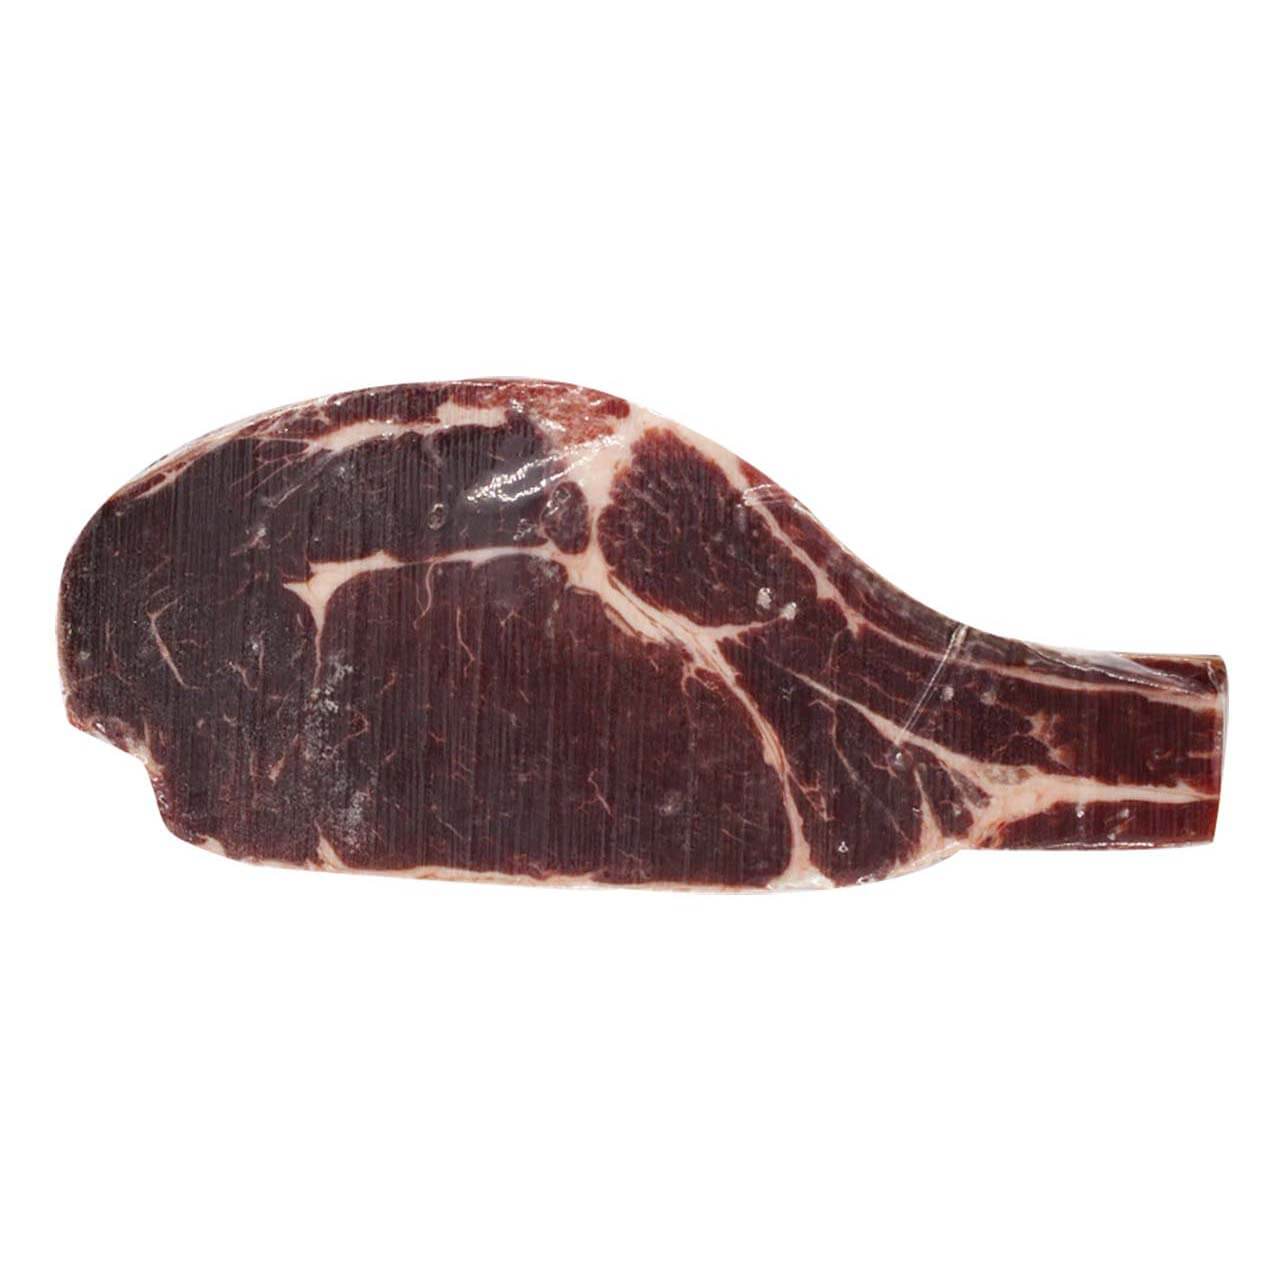 Beef Ribeye Steak - Bone-In - Organic